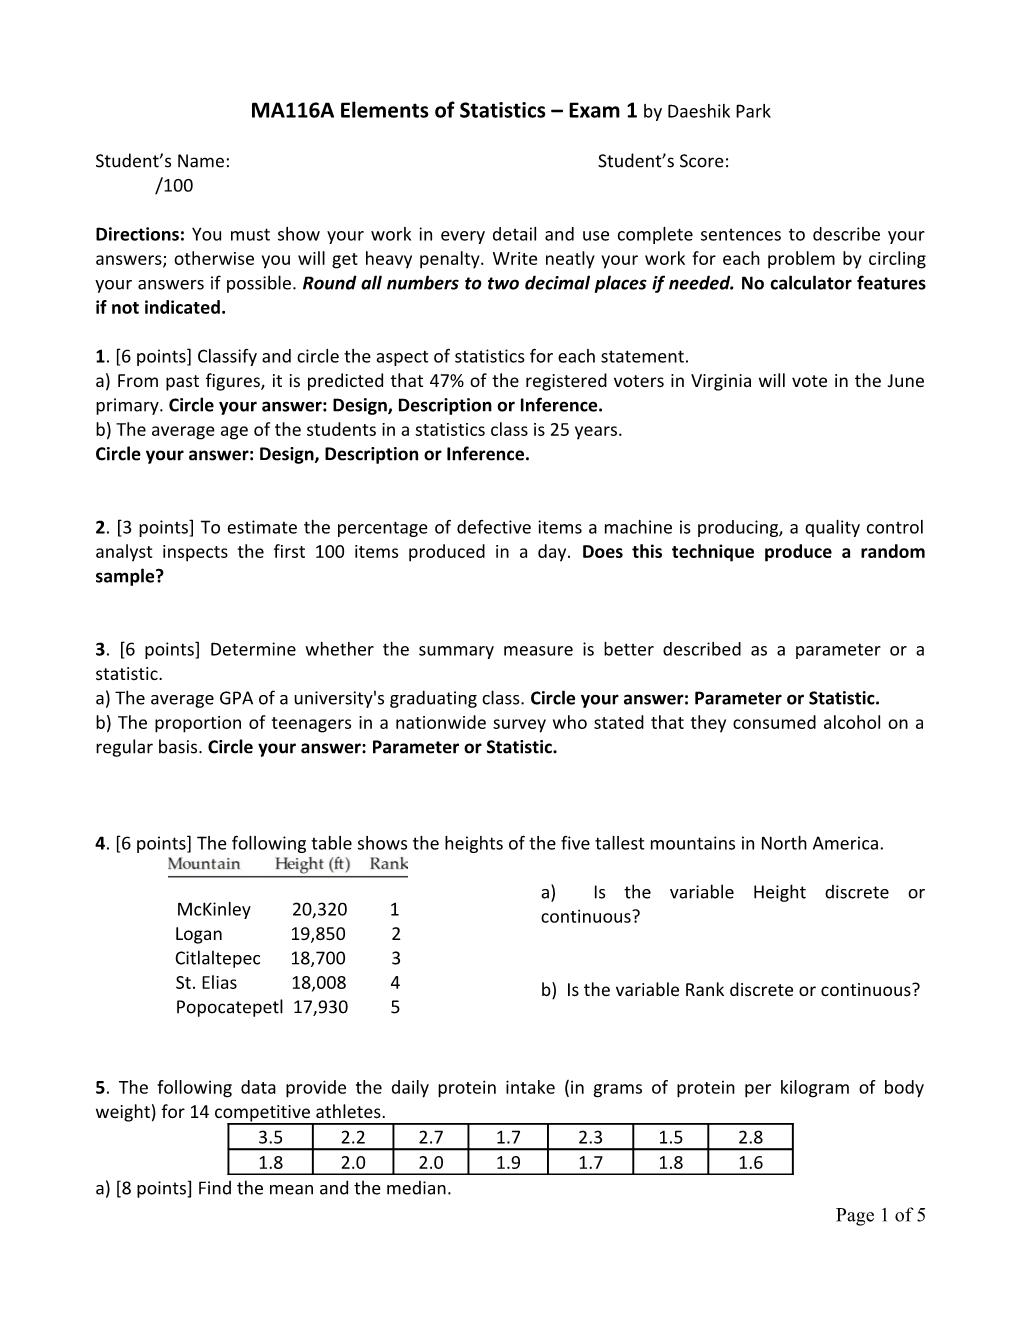 MA116A Elements of Statistics Exam 1 by Daeshik Park